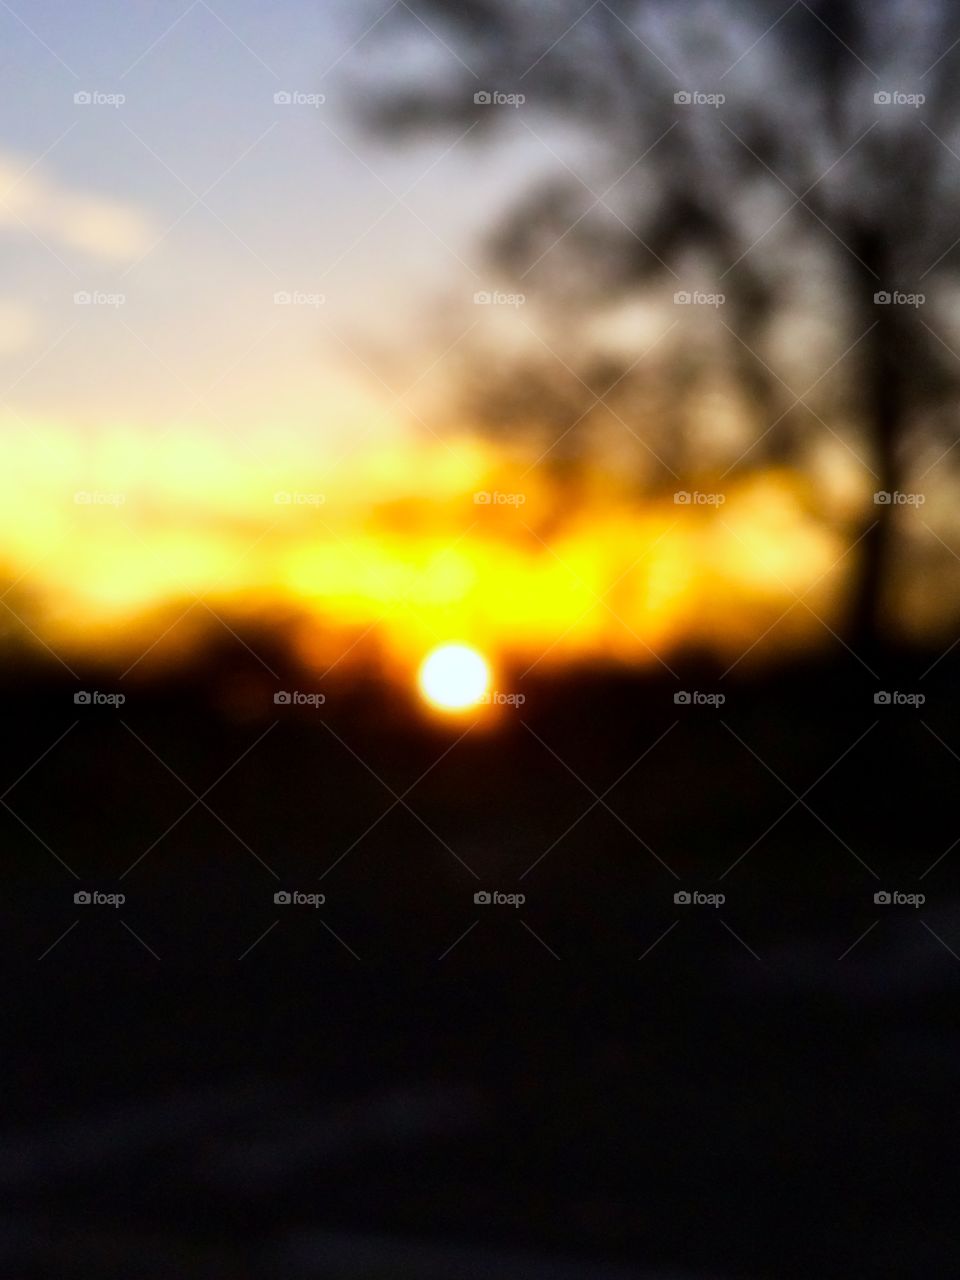 Sunset blur 